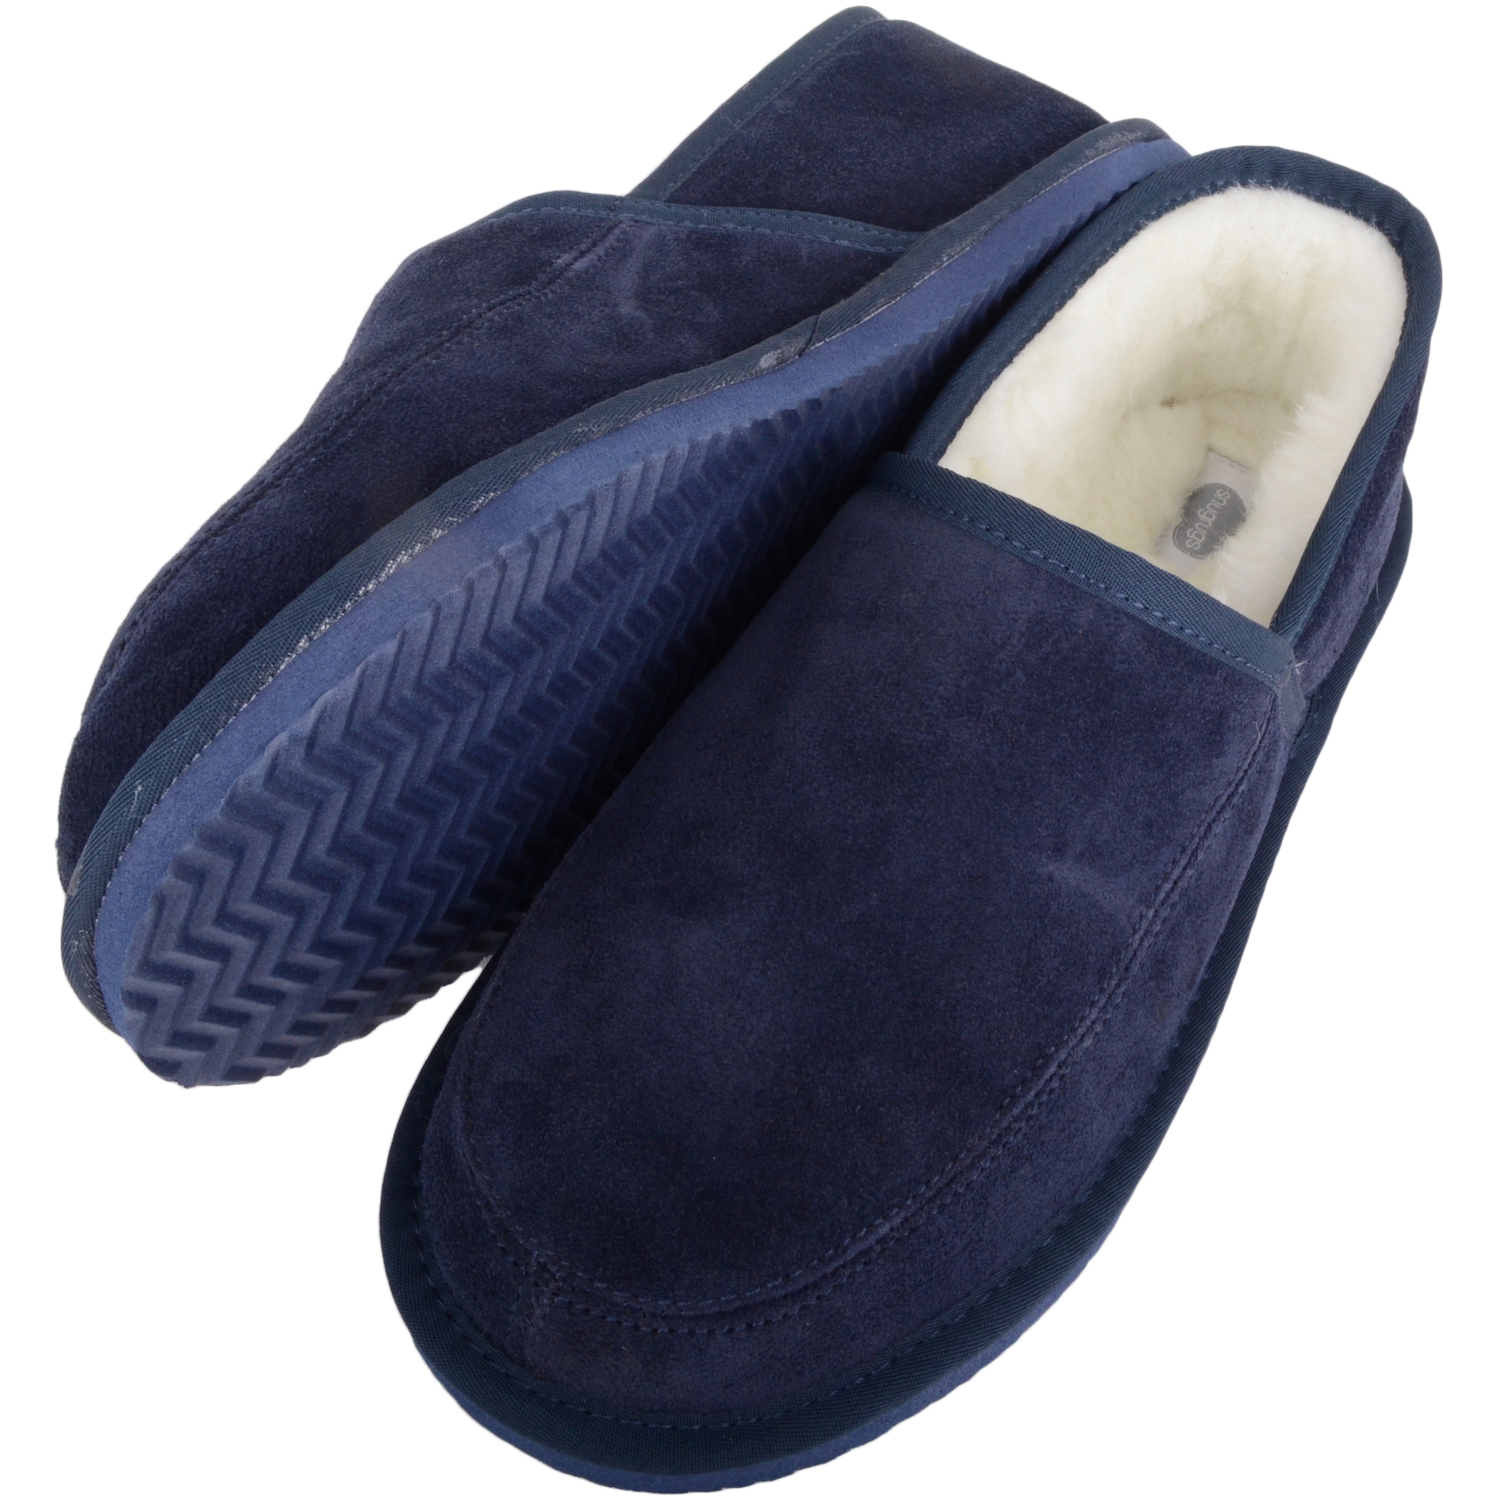 mens navy slippers